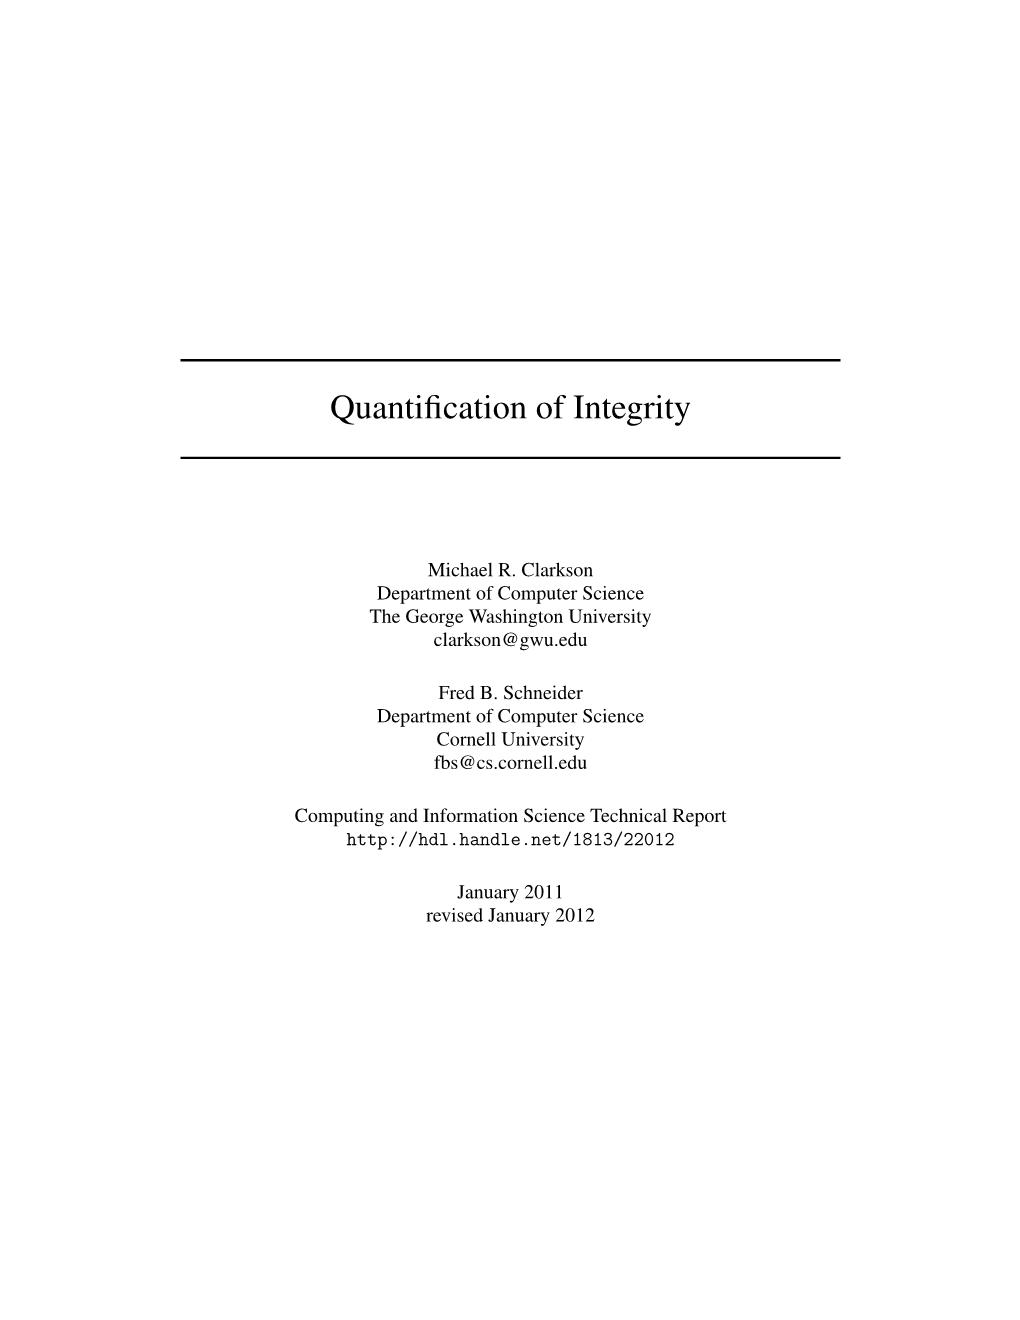 Quantification of Integrity